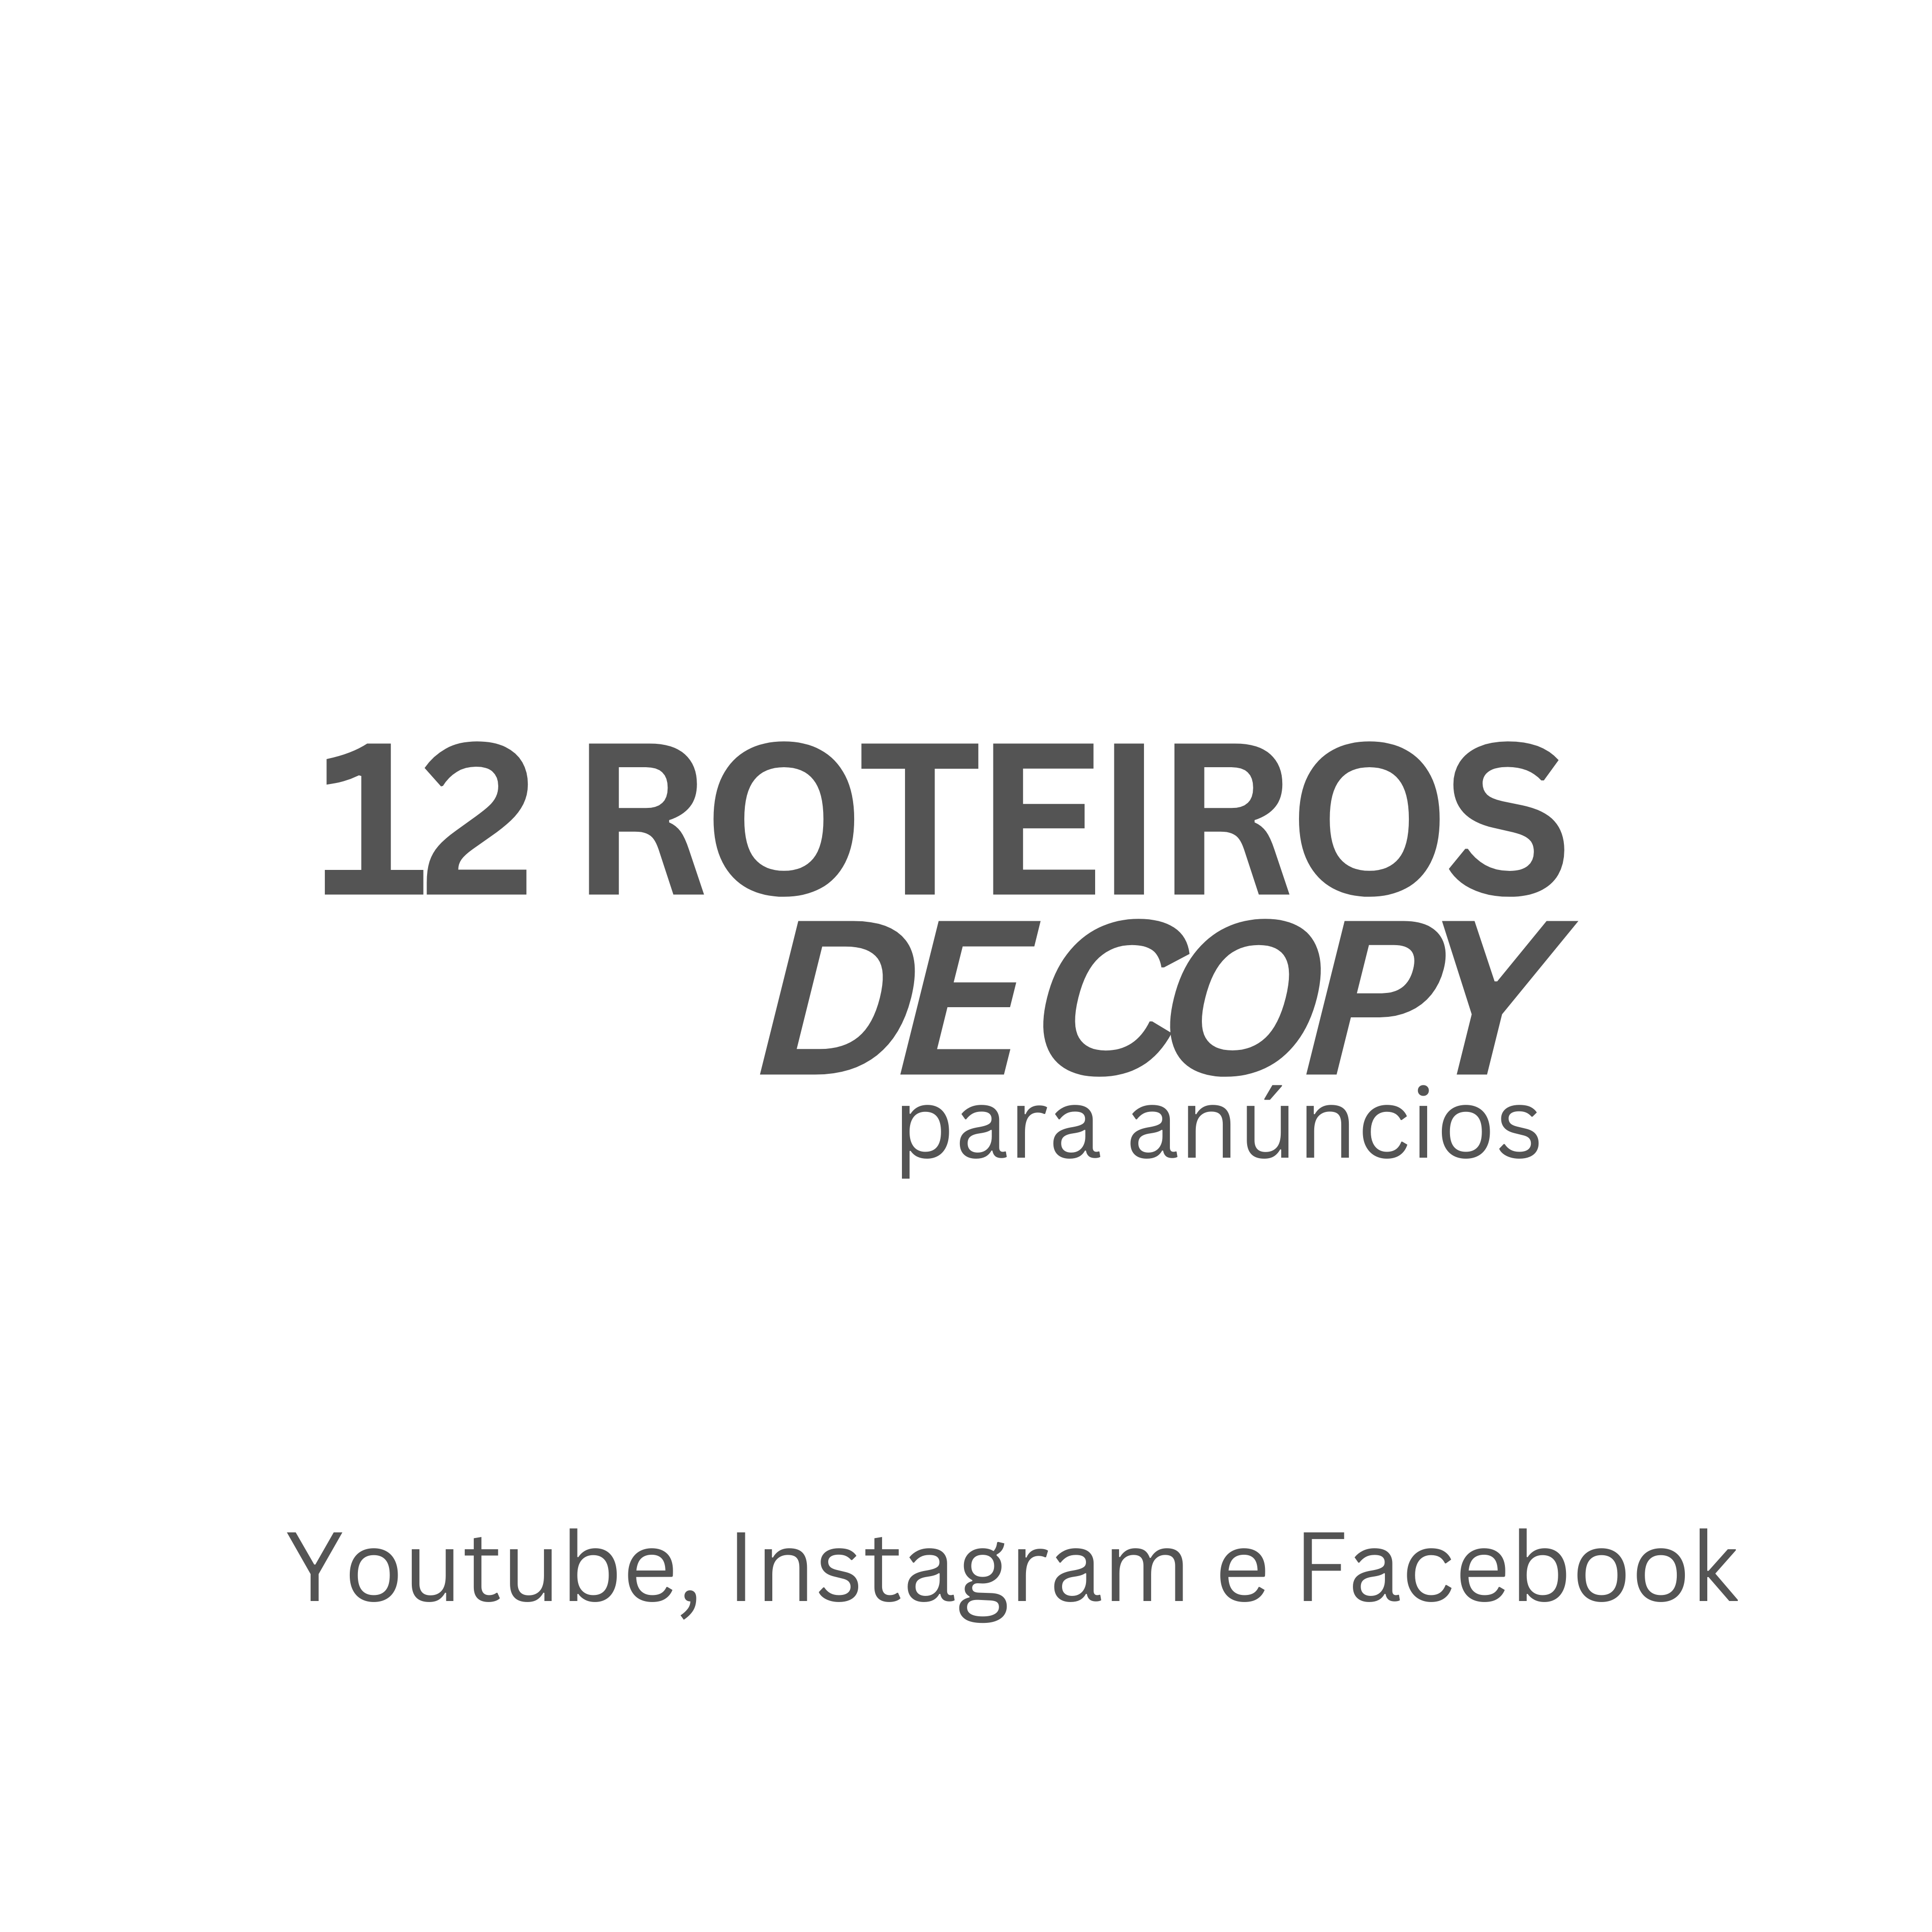 12 roteiros de copy para anúncios (Youtube, Instagram, Facebook) 101